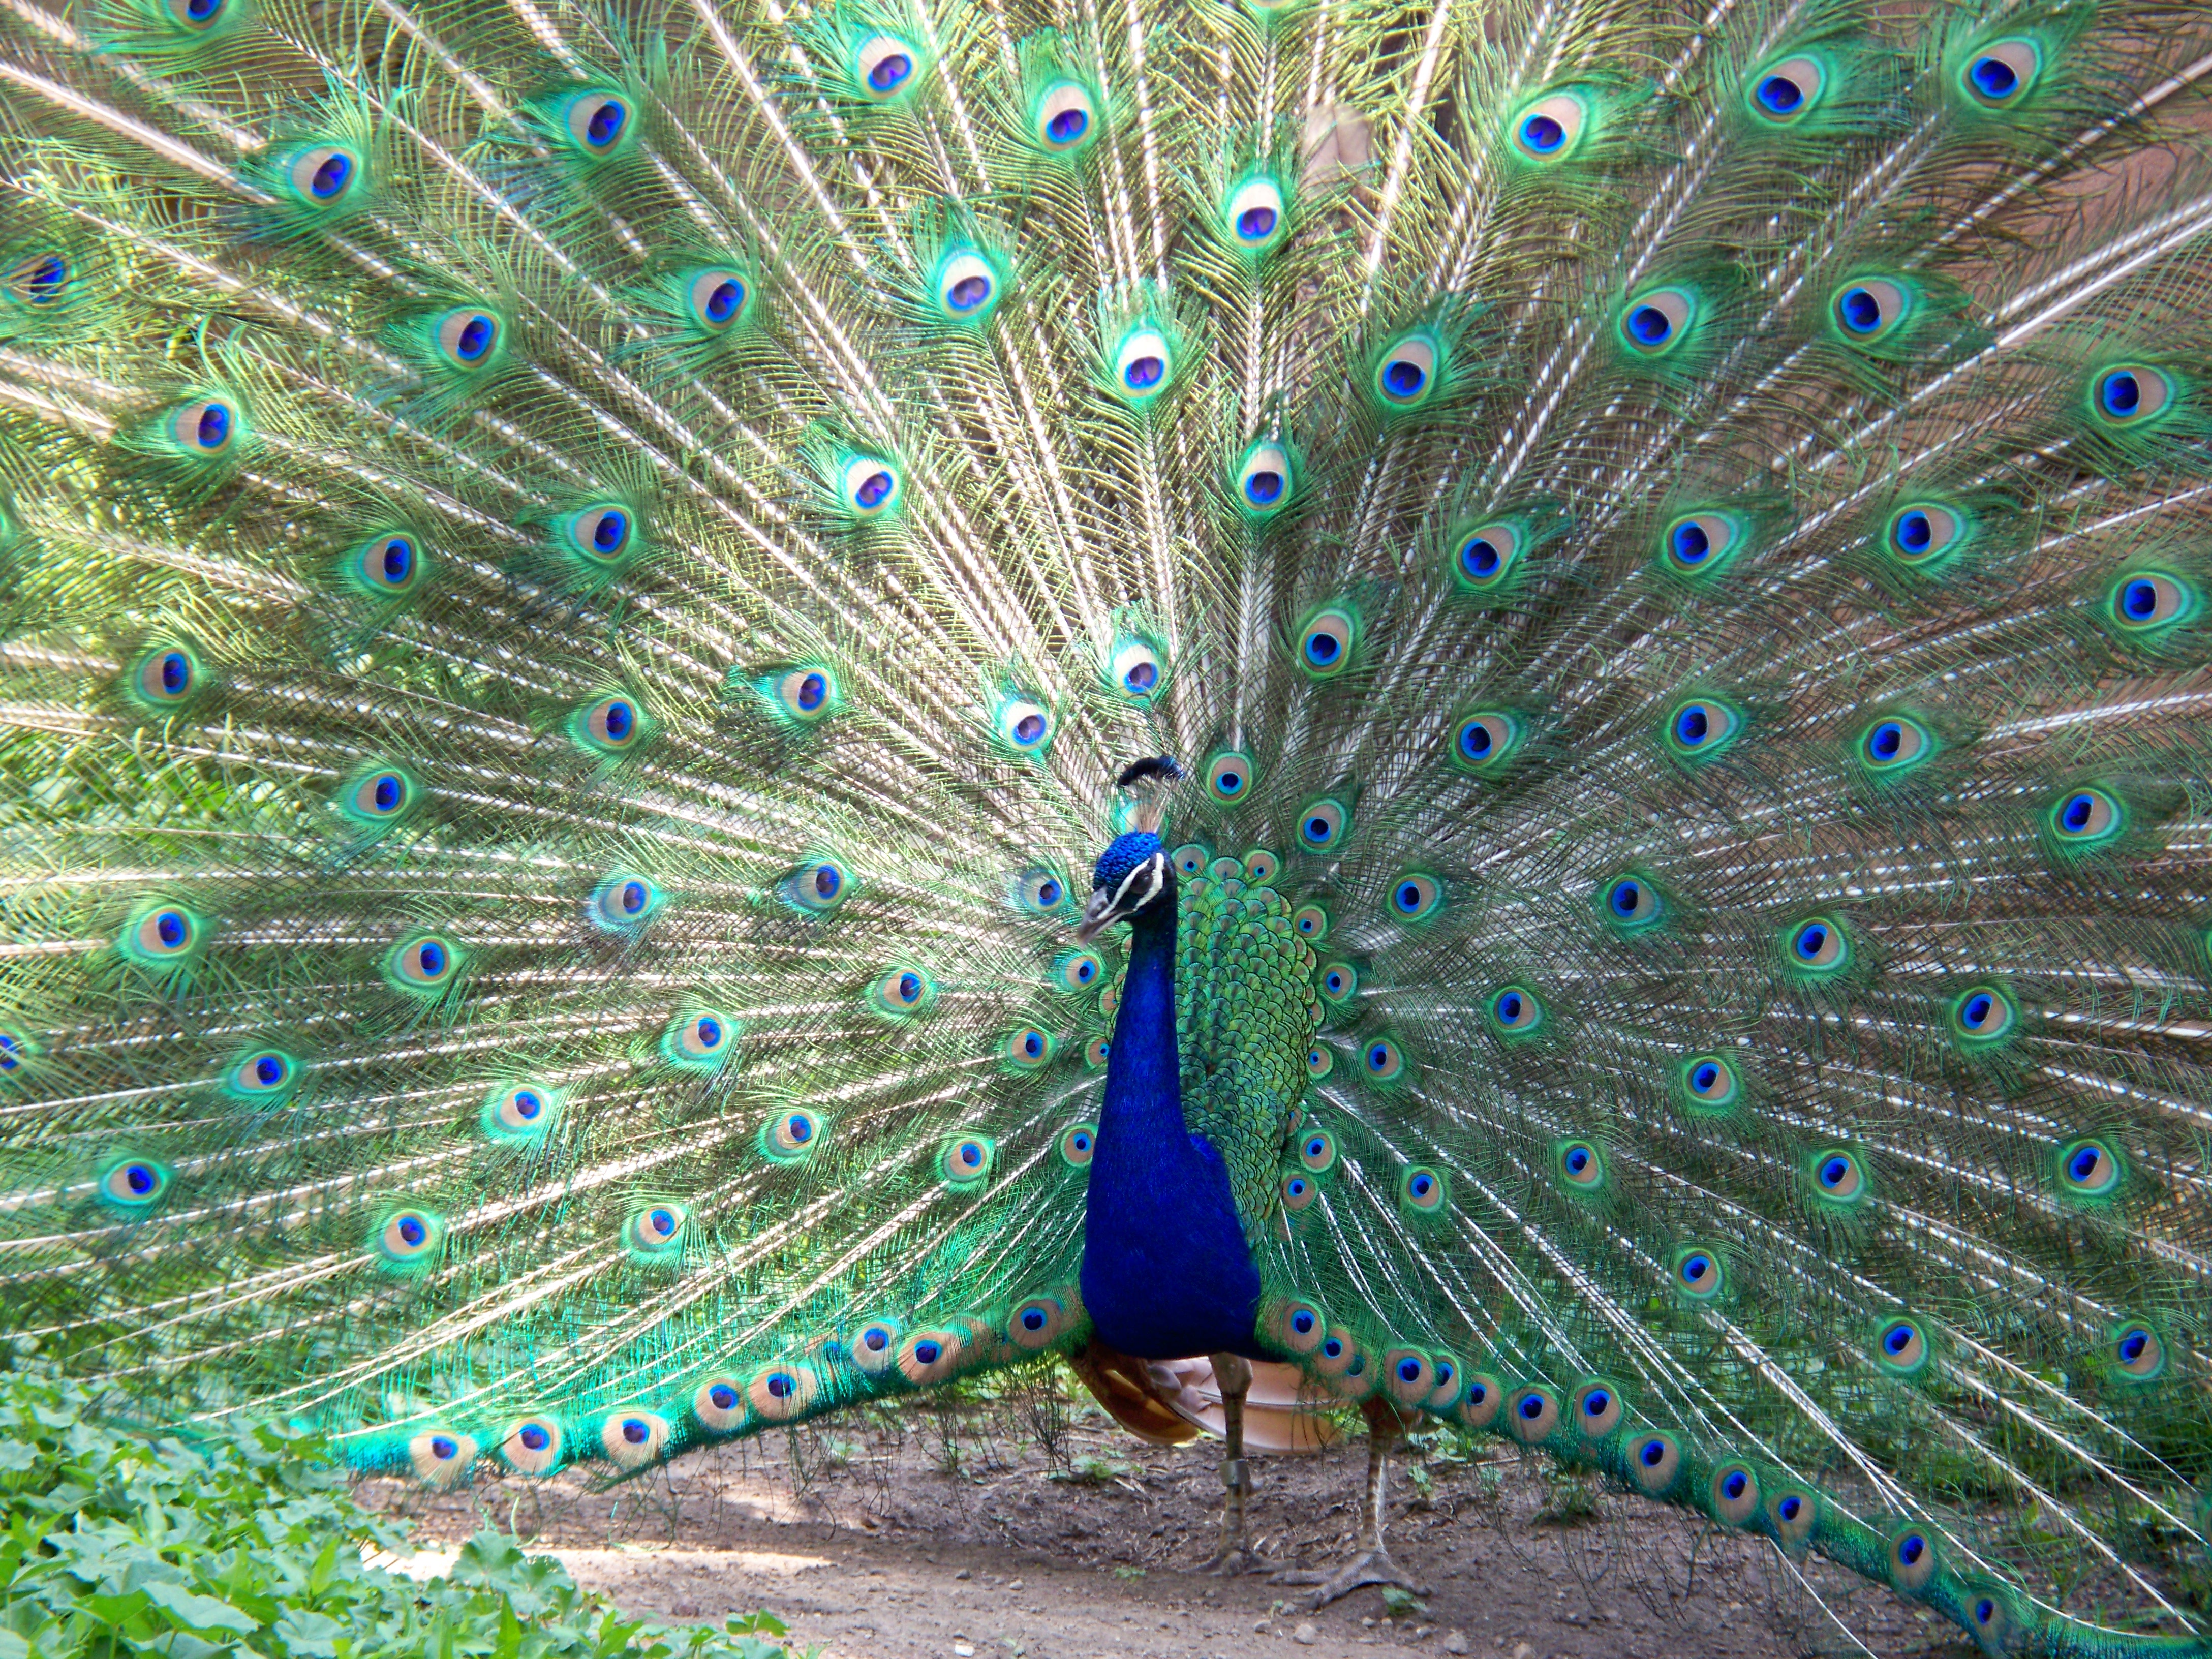 File:Peacock Milwaukee County Zoo.jpg - Wikimedia Commons